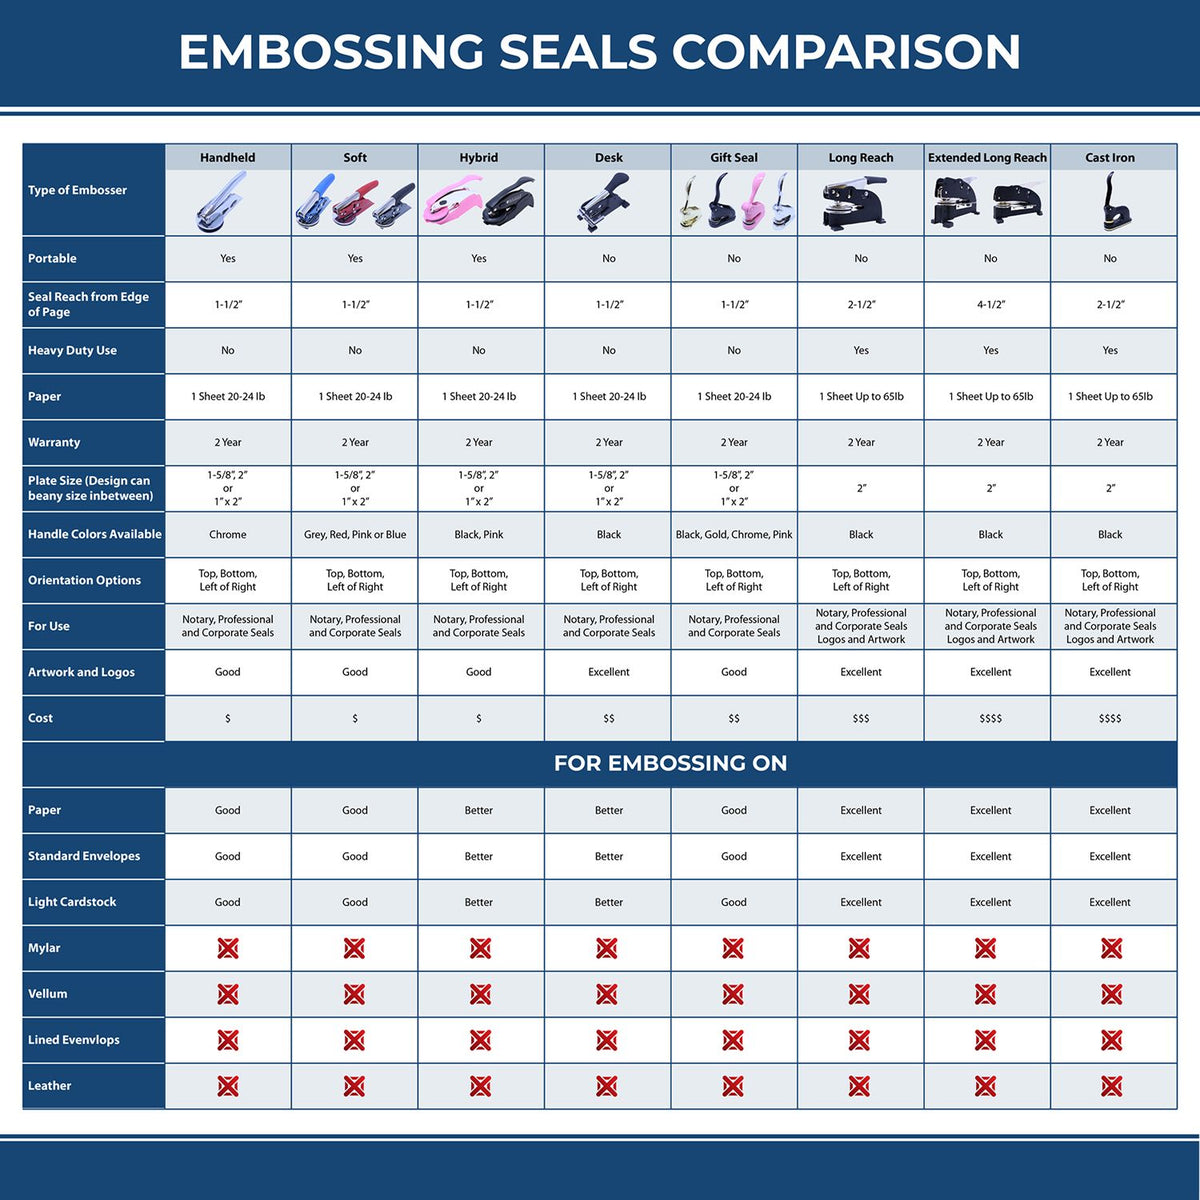 Geologist Cast Iron Desk Seal Embosser 3027GEO Embossing Seal Comparison